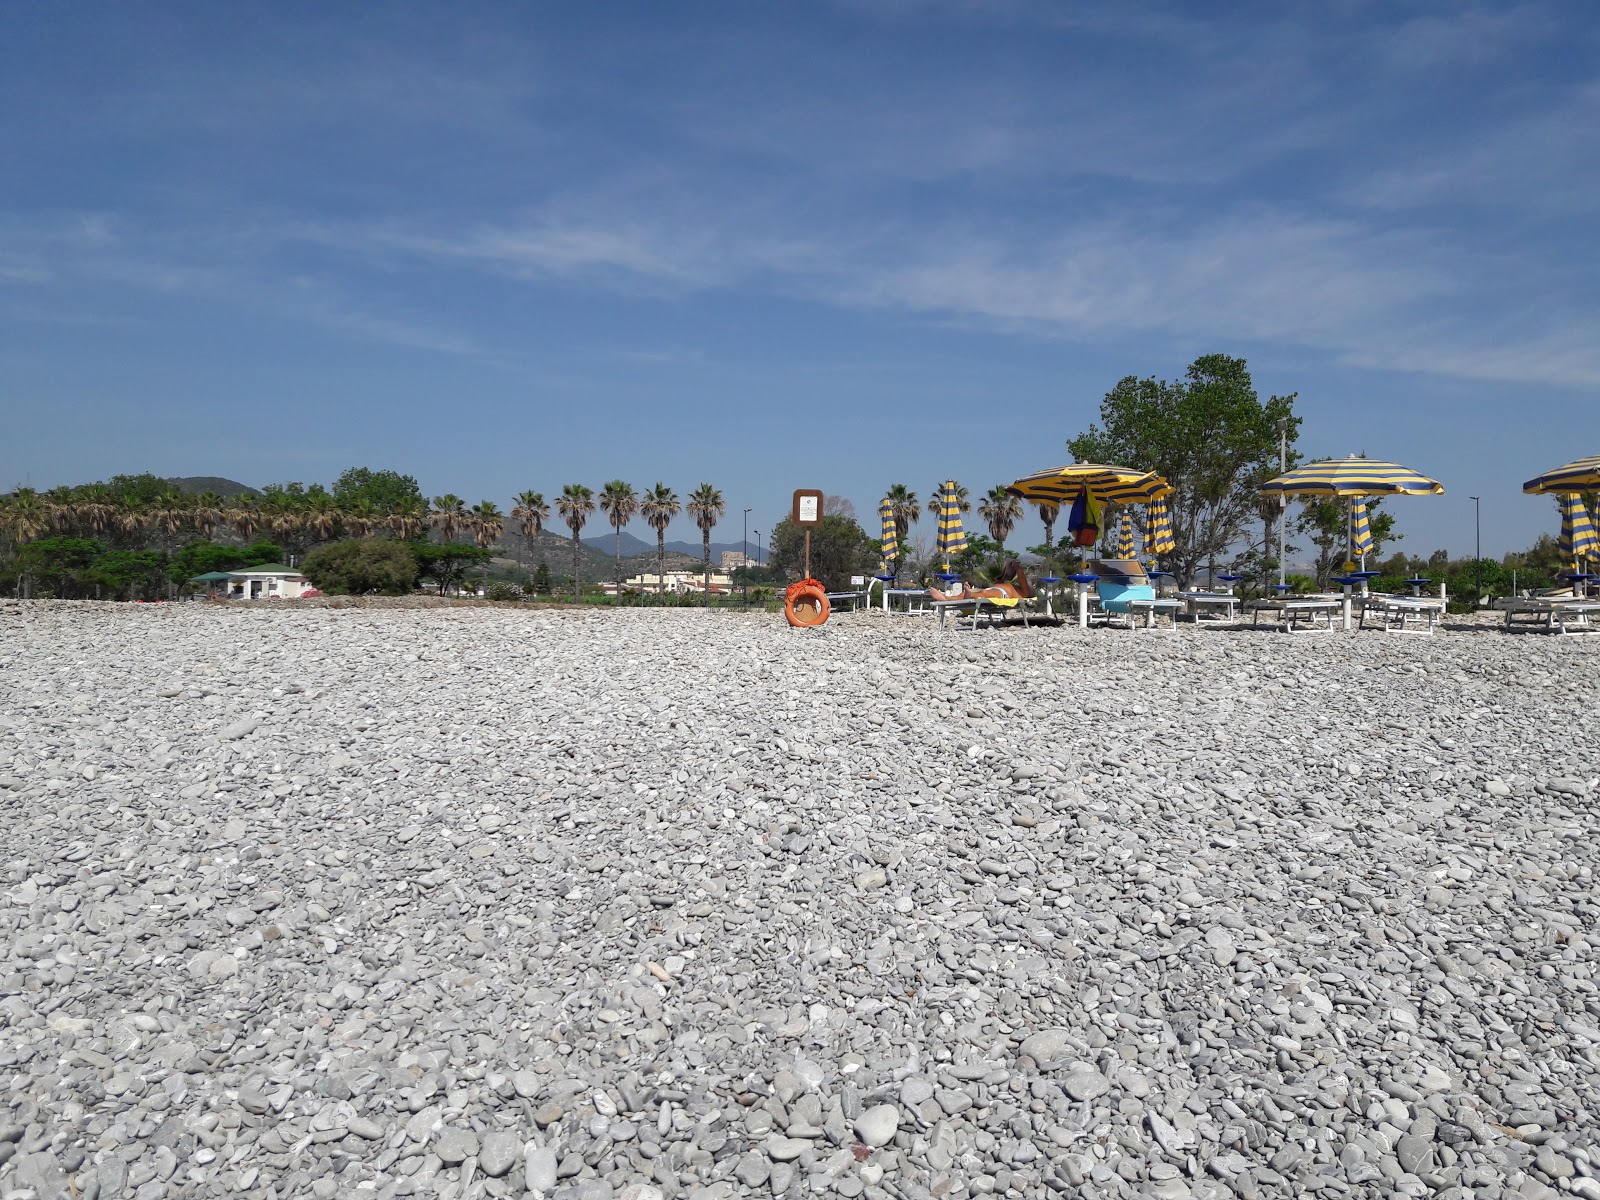 Spiaggia Rocca Imperiale'in fotoğrafı plaj tatil beldesi alanı